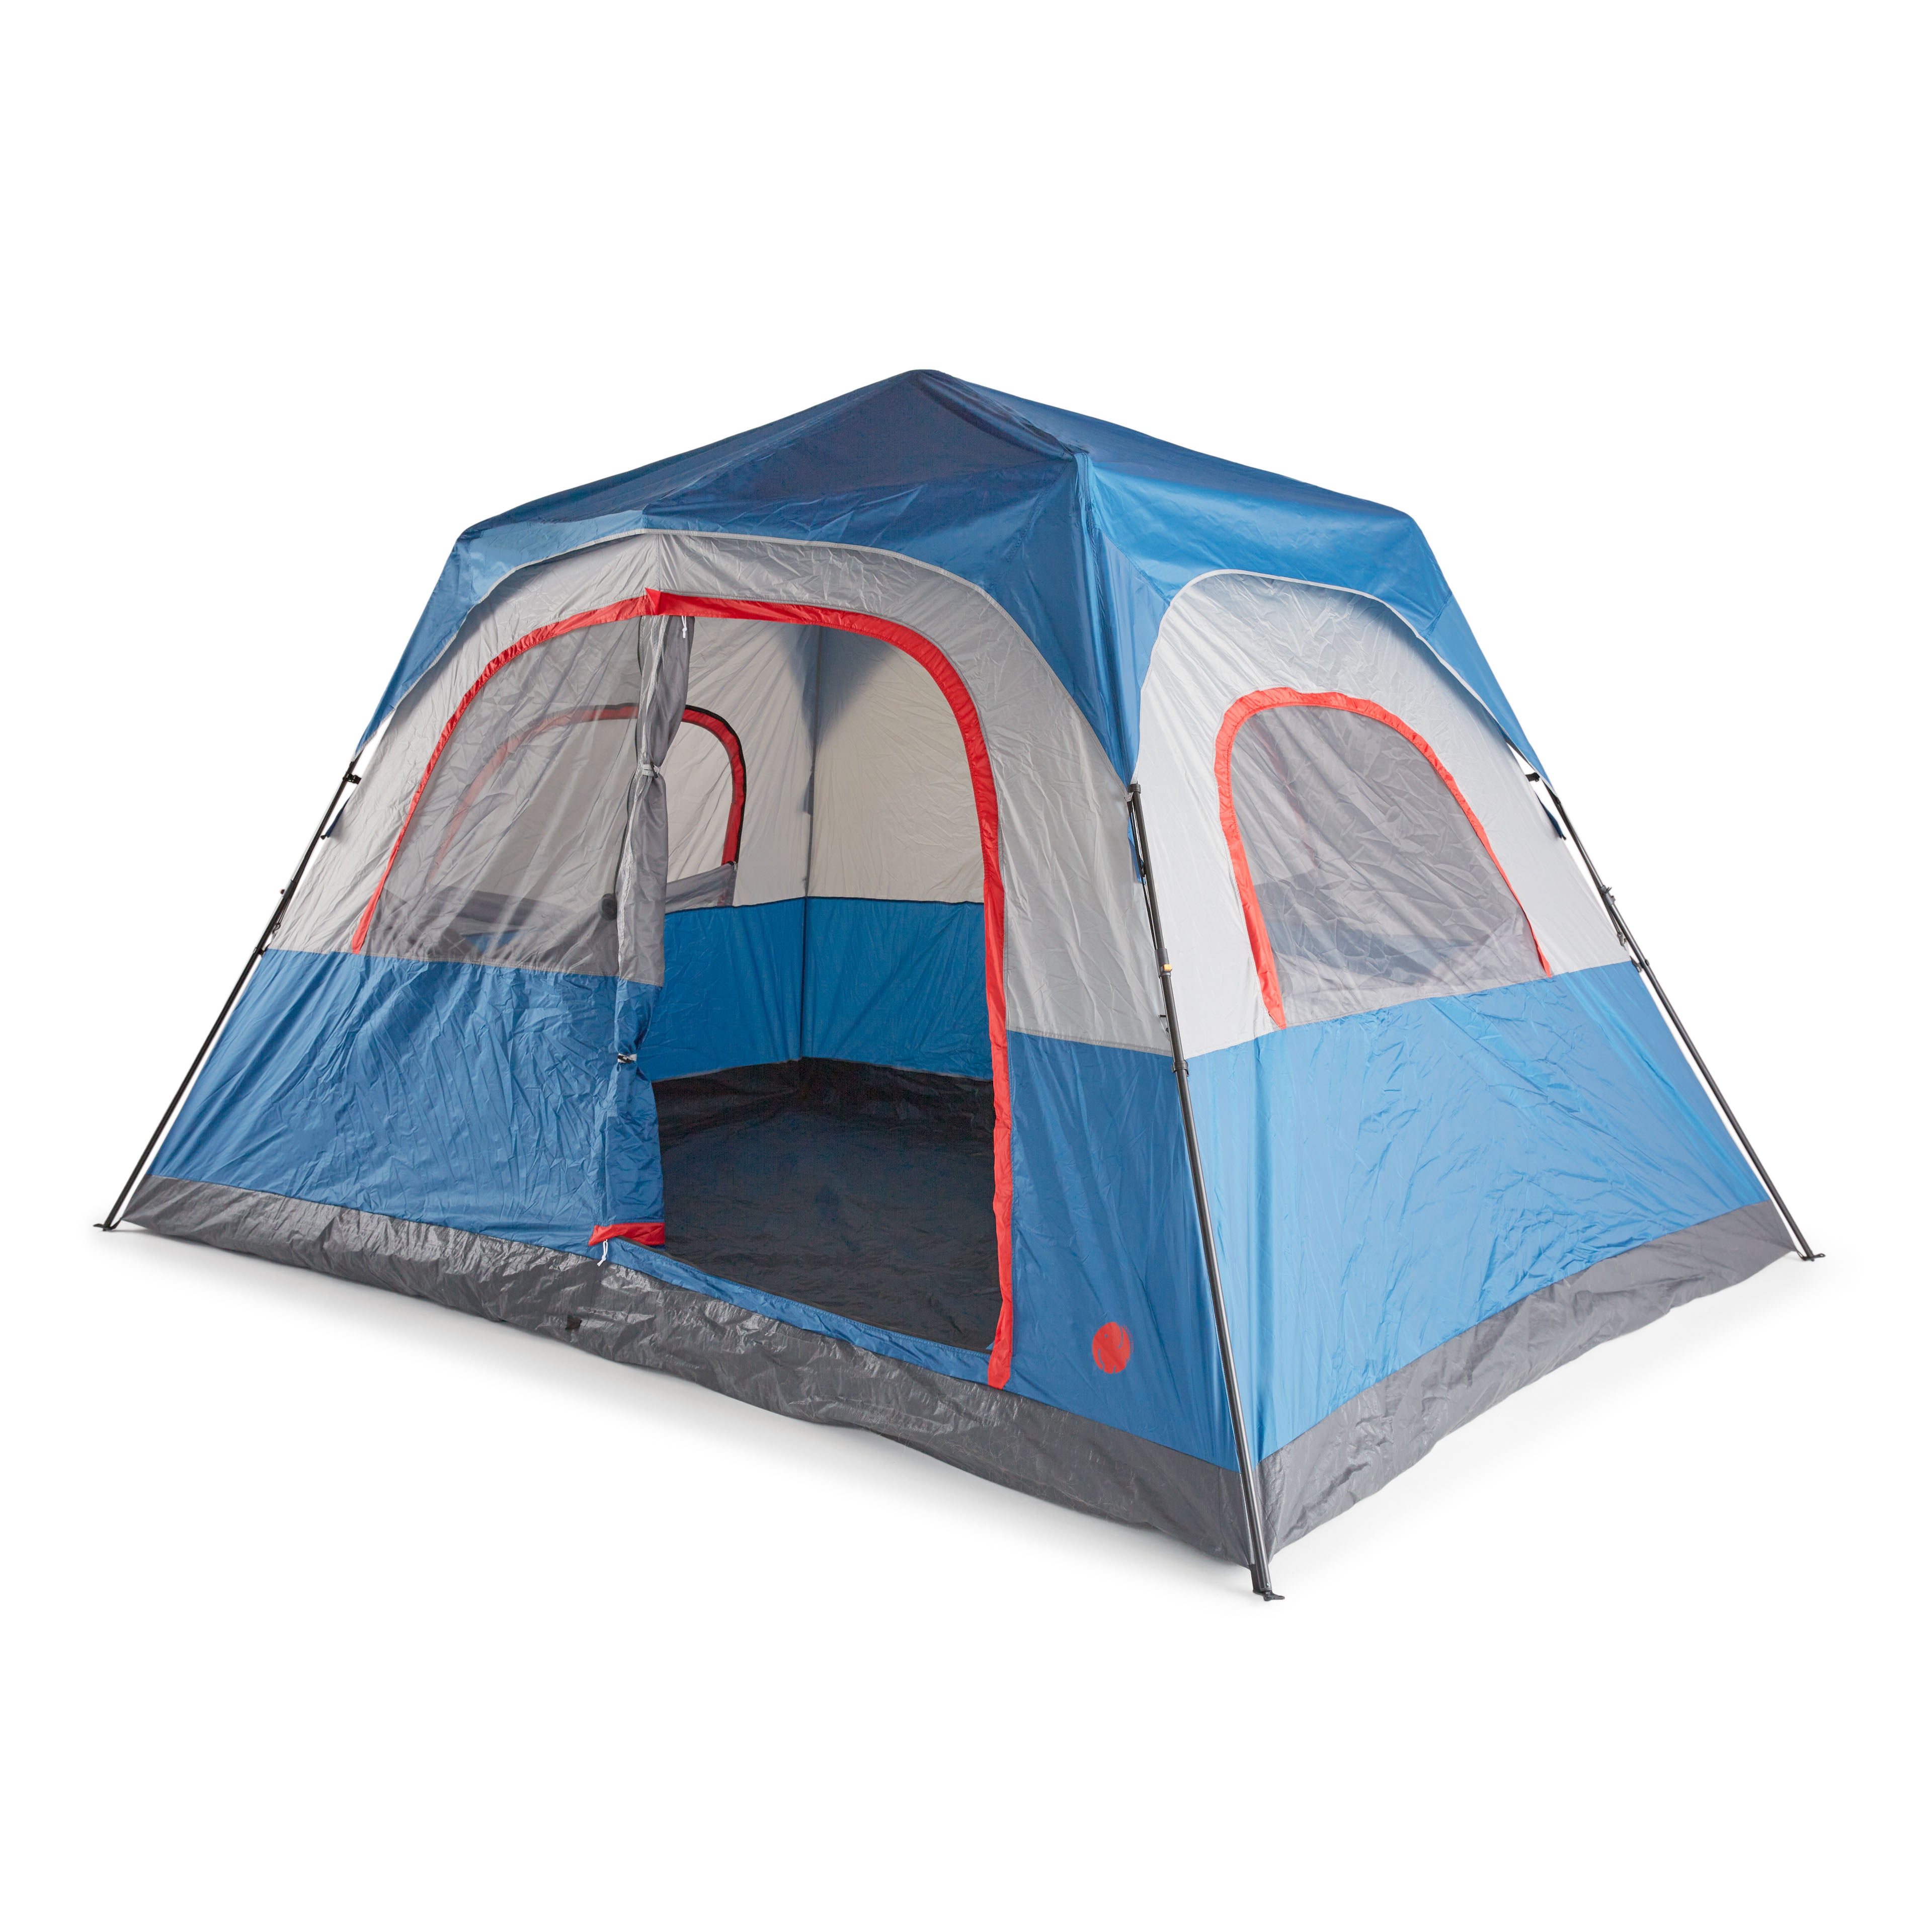 OMNICORE DESIGNS Instant8 Instant Cabin Tent - 13' x 9' Sleeps 8